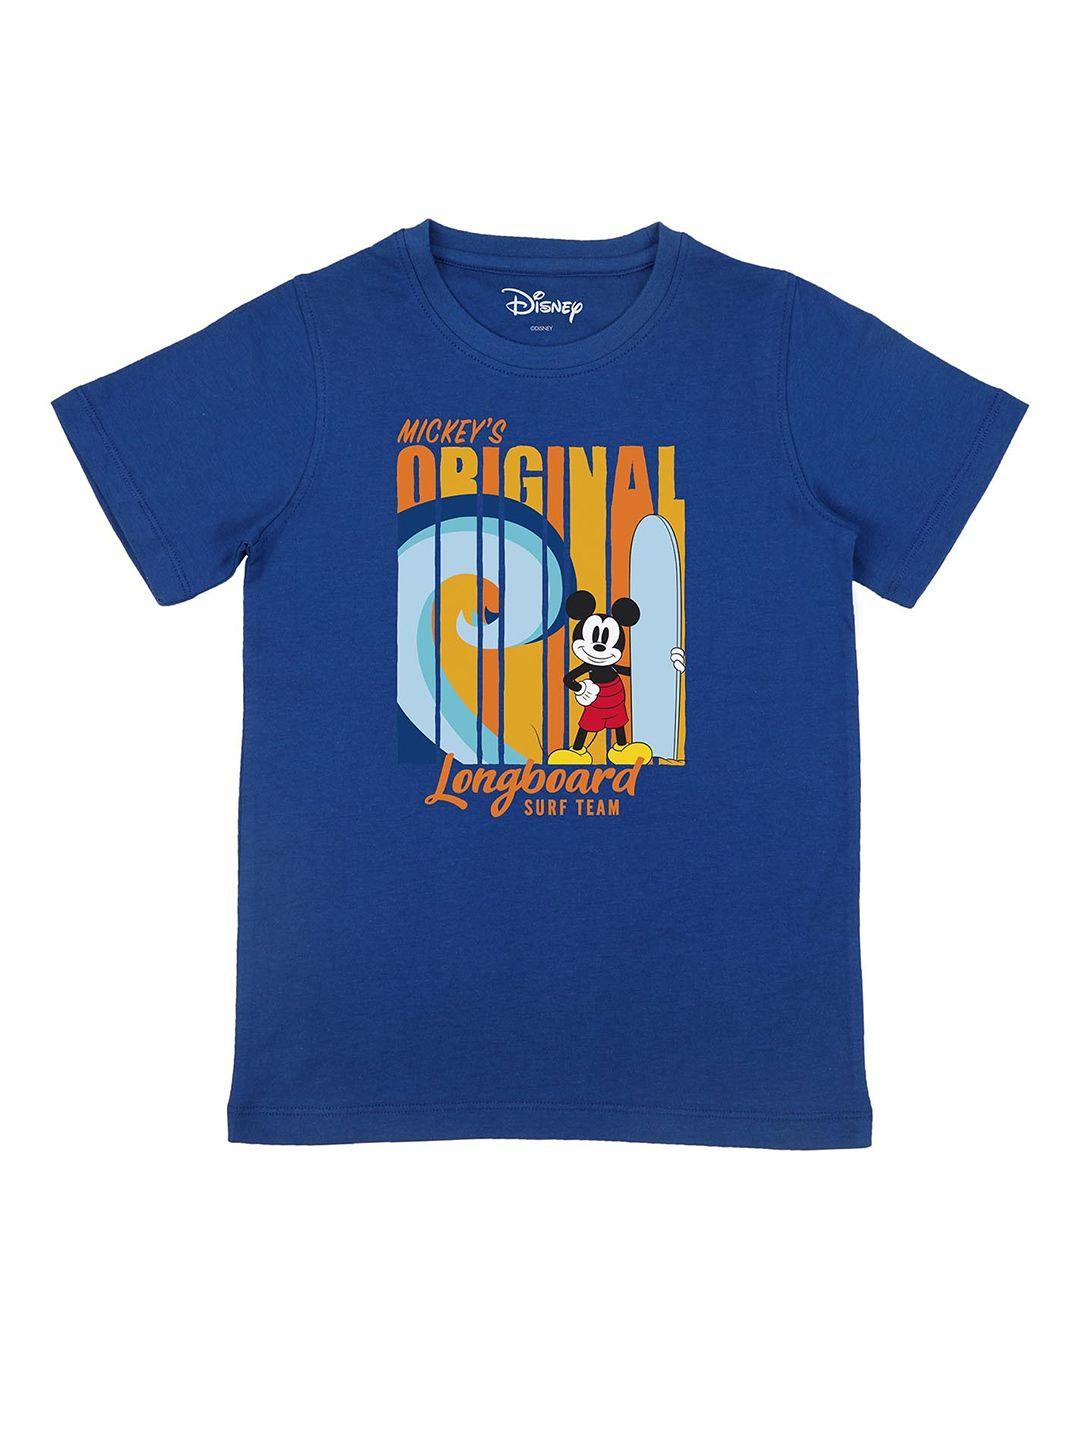 disney-by-wear-your-mind-boys-blue-printed-t-shirt